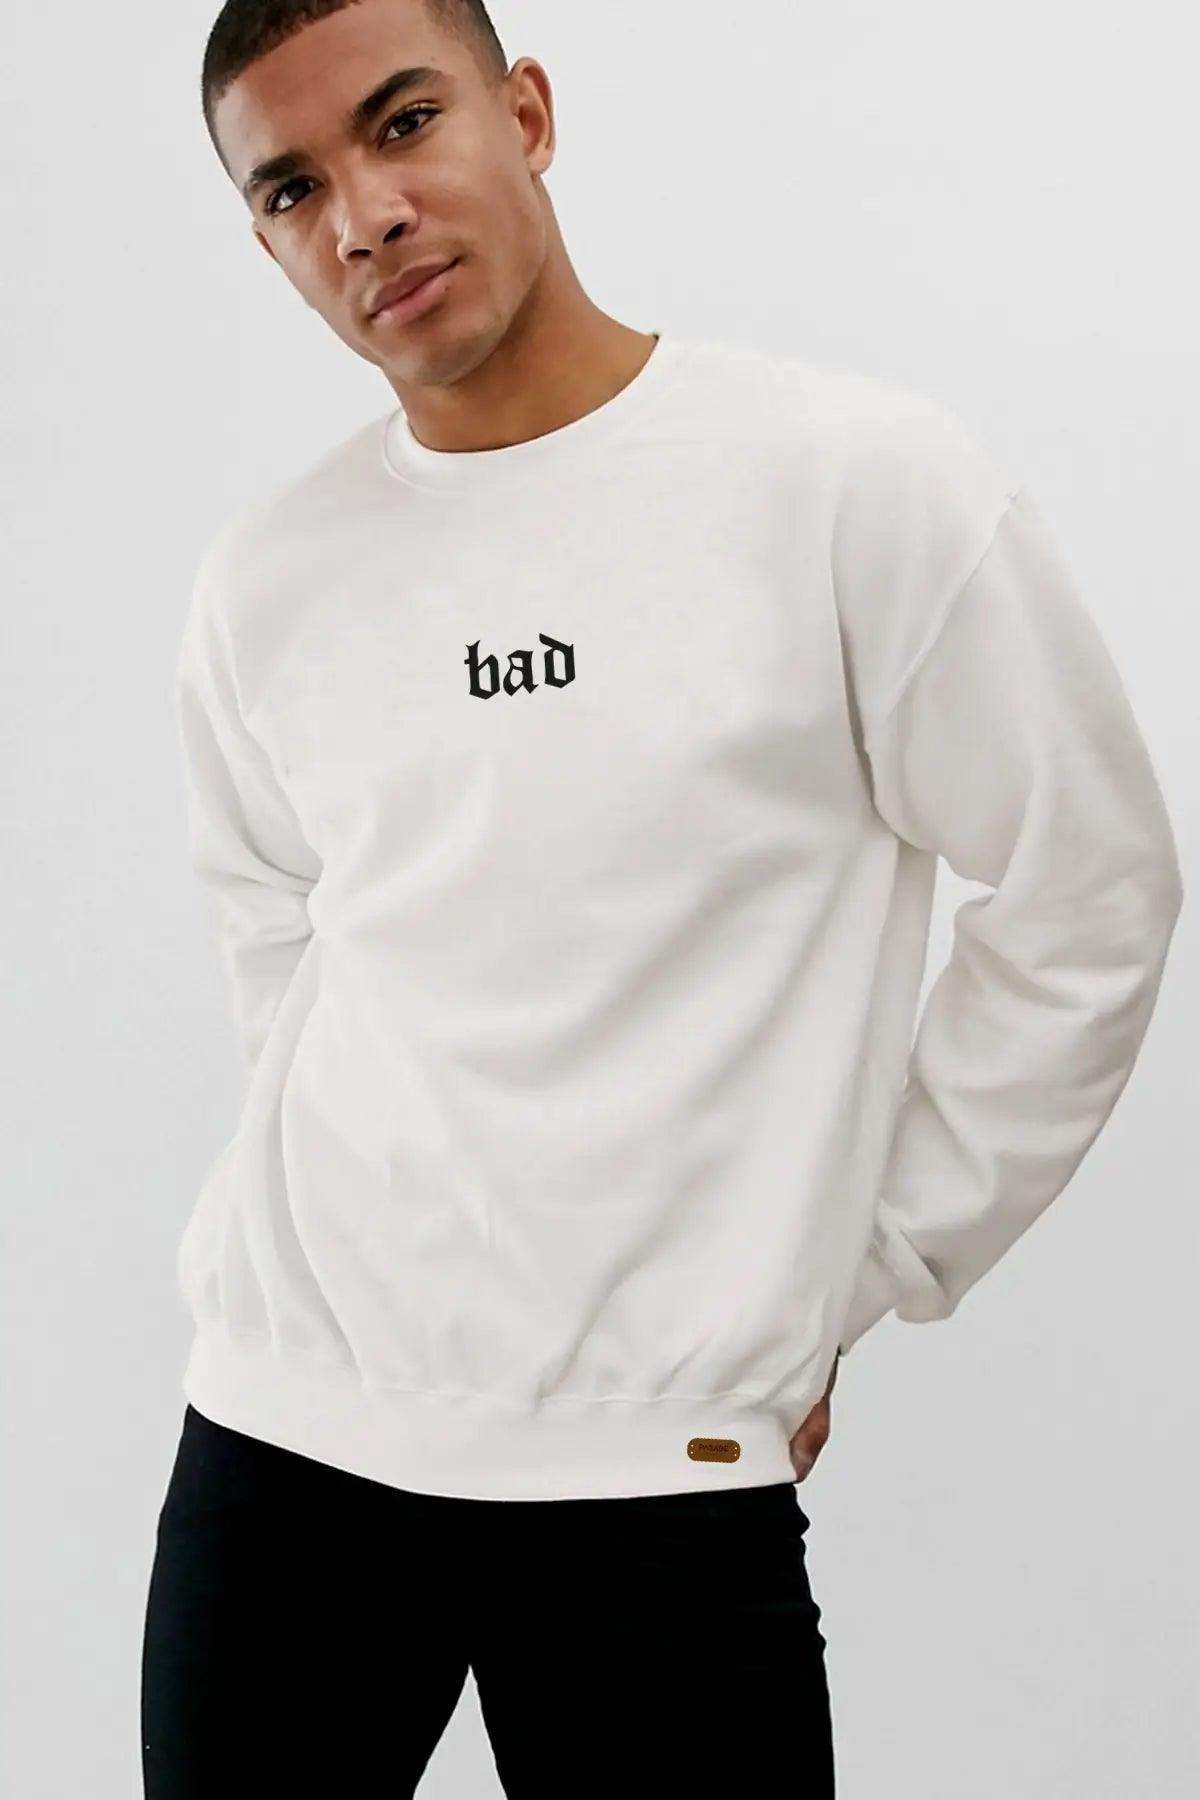 Bad Oversize Erkek Sweatshirt - PΛSΛGE